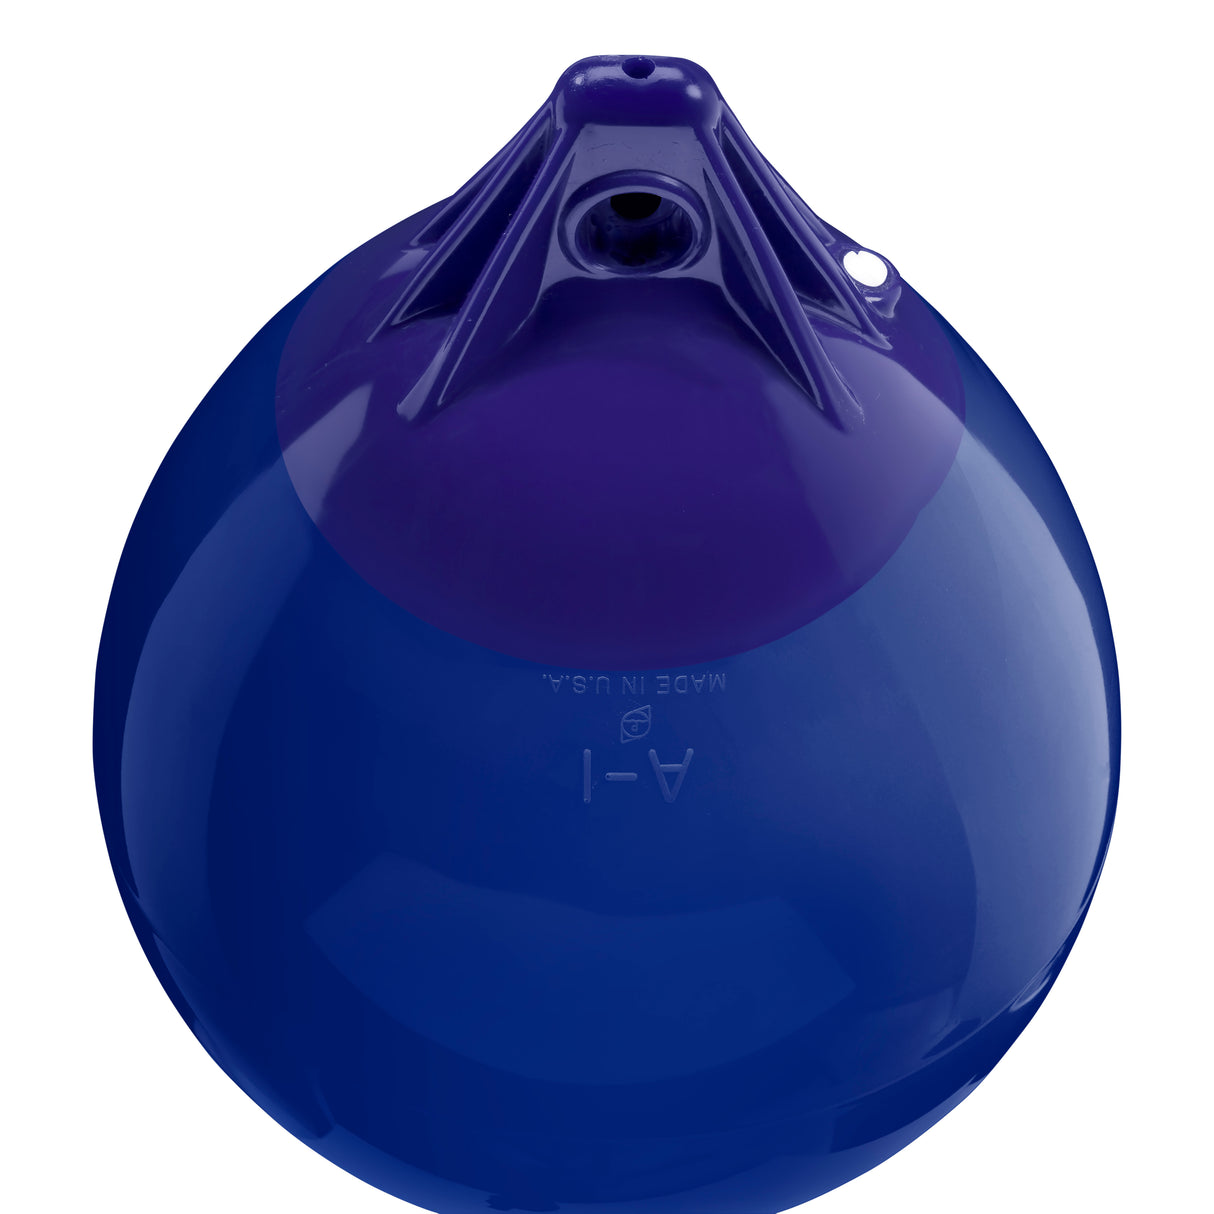 Cobalt Blue inflatable buoy, Polyform A-1 angled shot